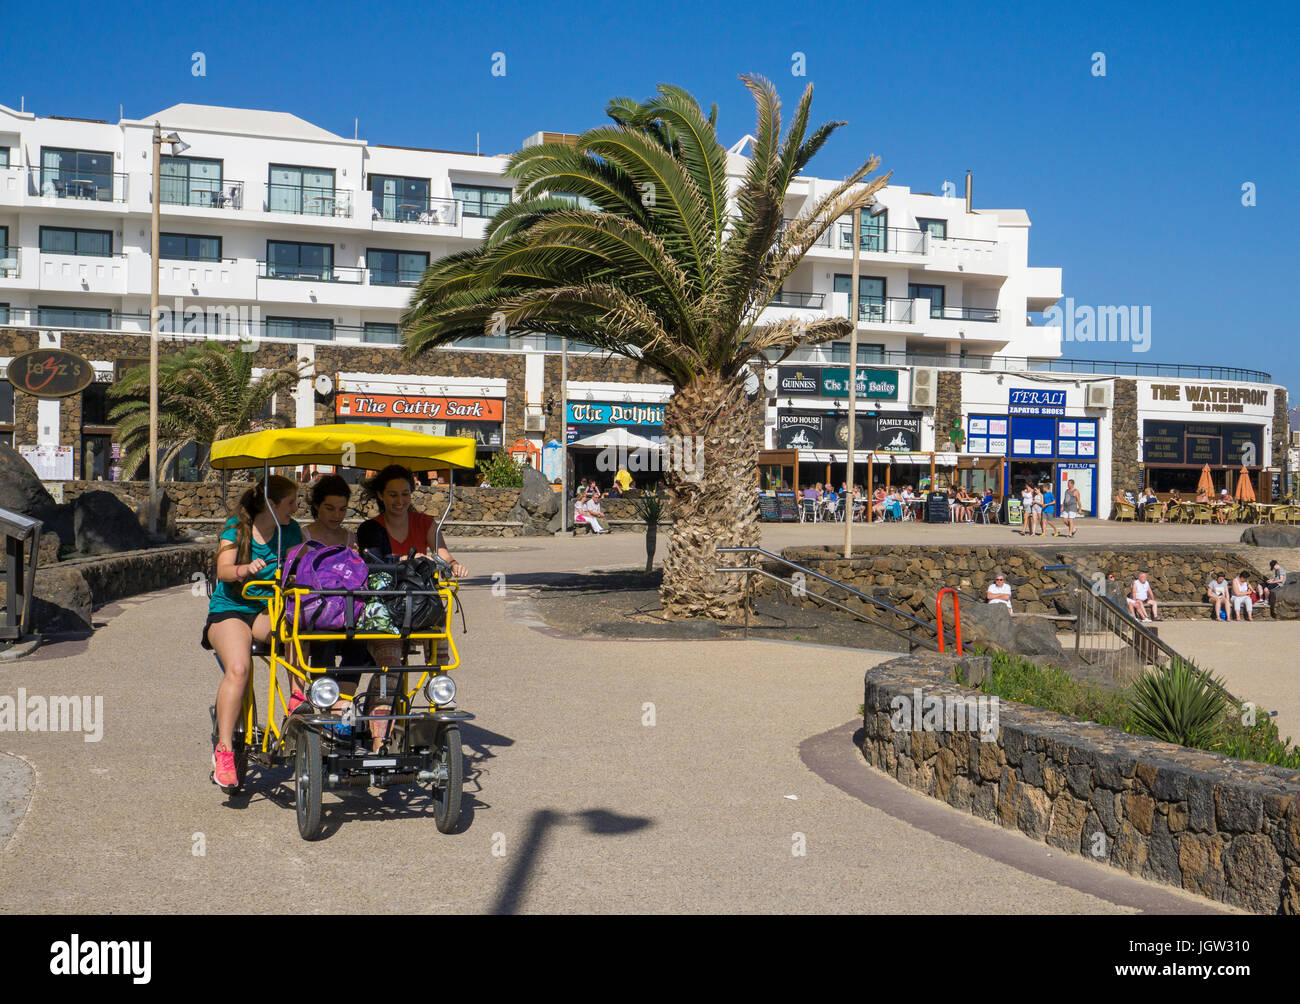 Tourists on 4-wheel bycicle at promenade Playa de las Cucharas, Costa Teguise, Lanzarote island, Canary islands, Spain, Europe Stock Photo